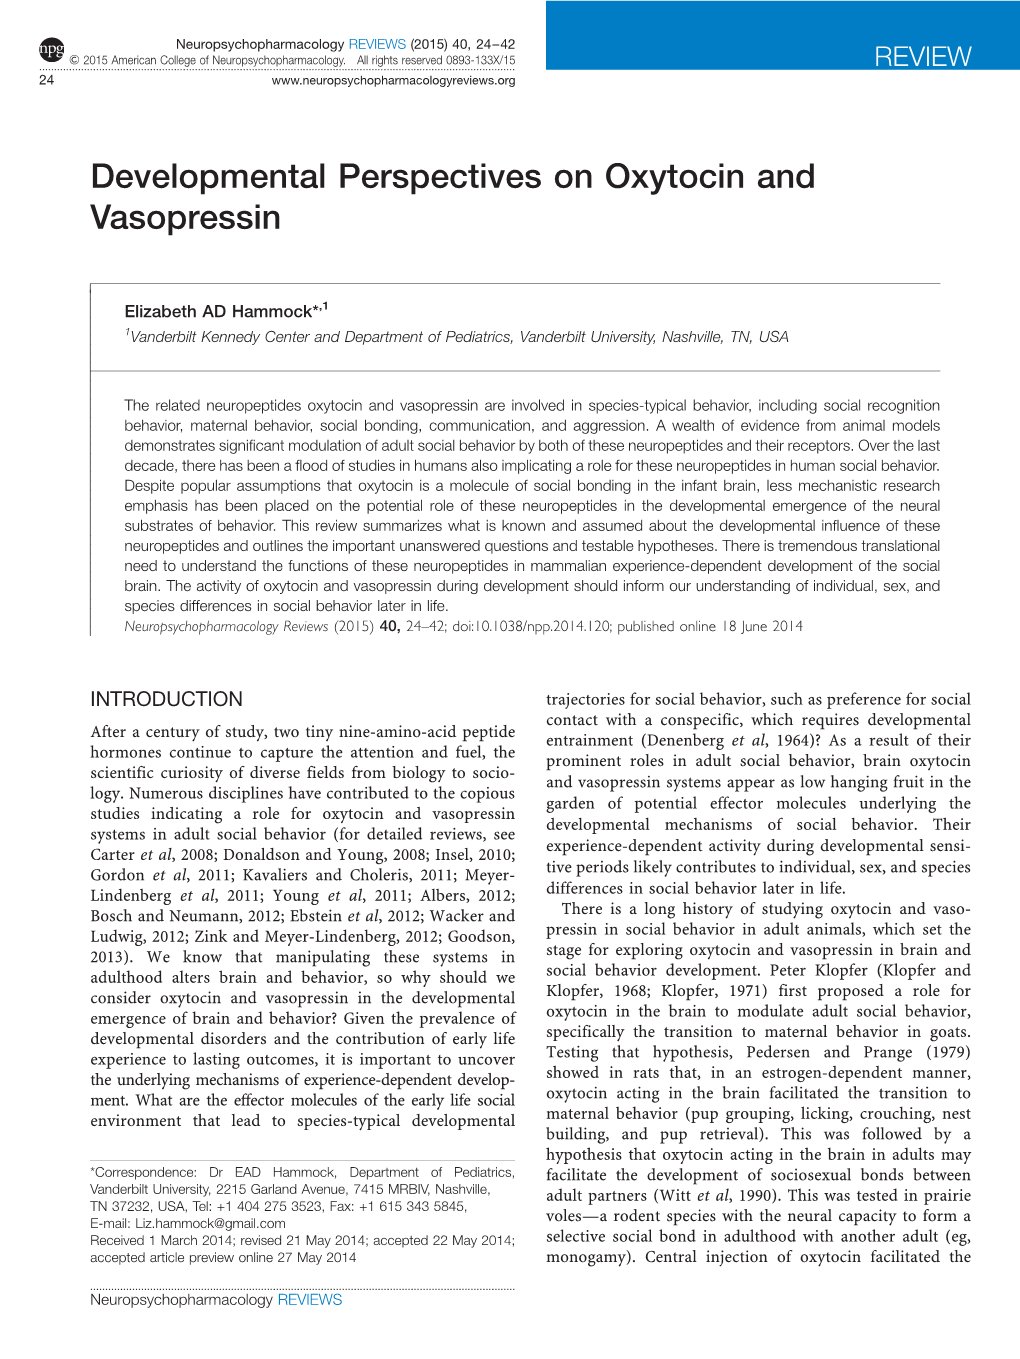 Developmental Perspectives on Oxytocin and Vasopressin